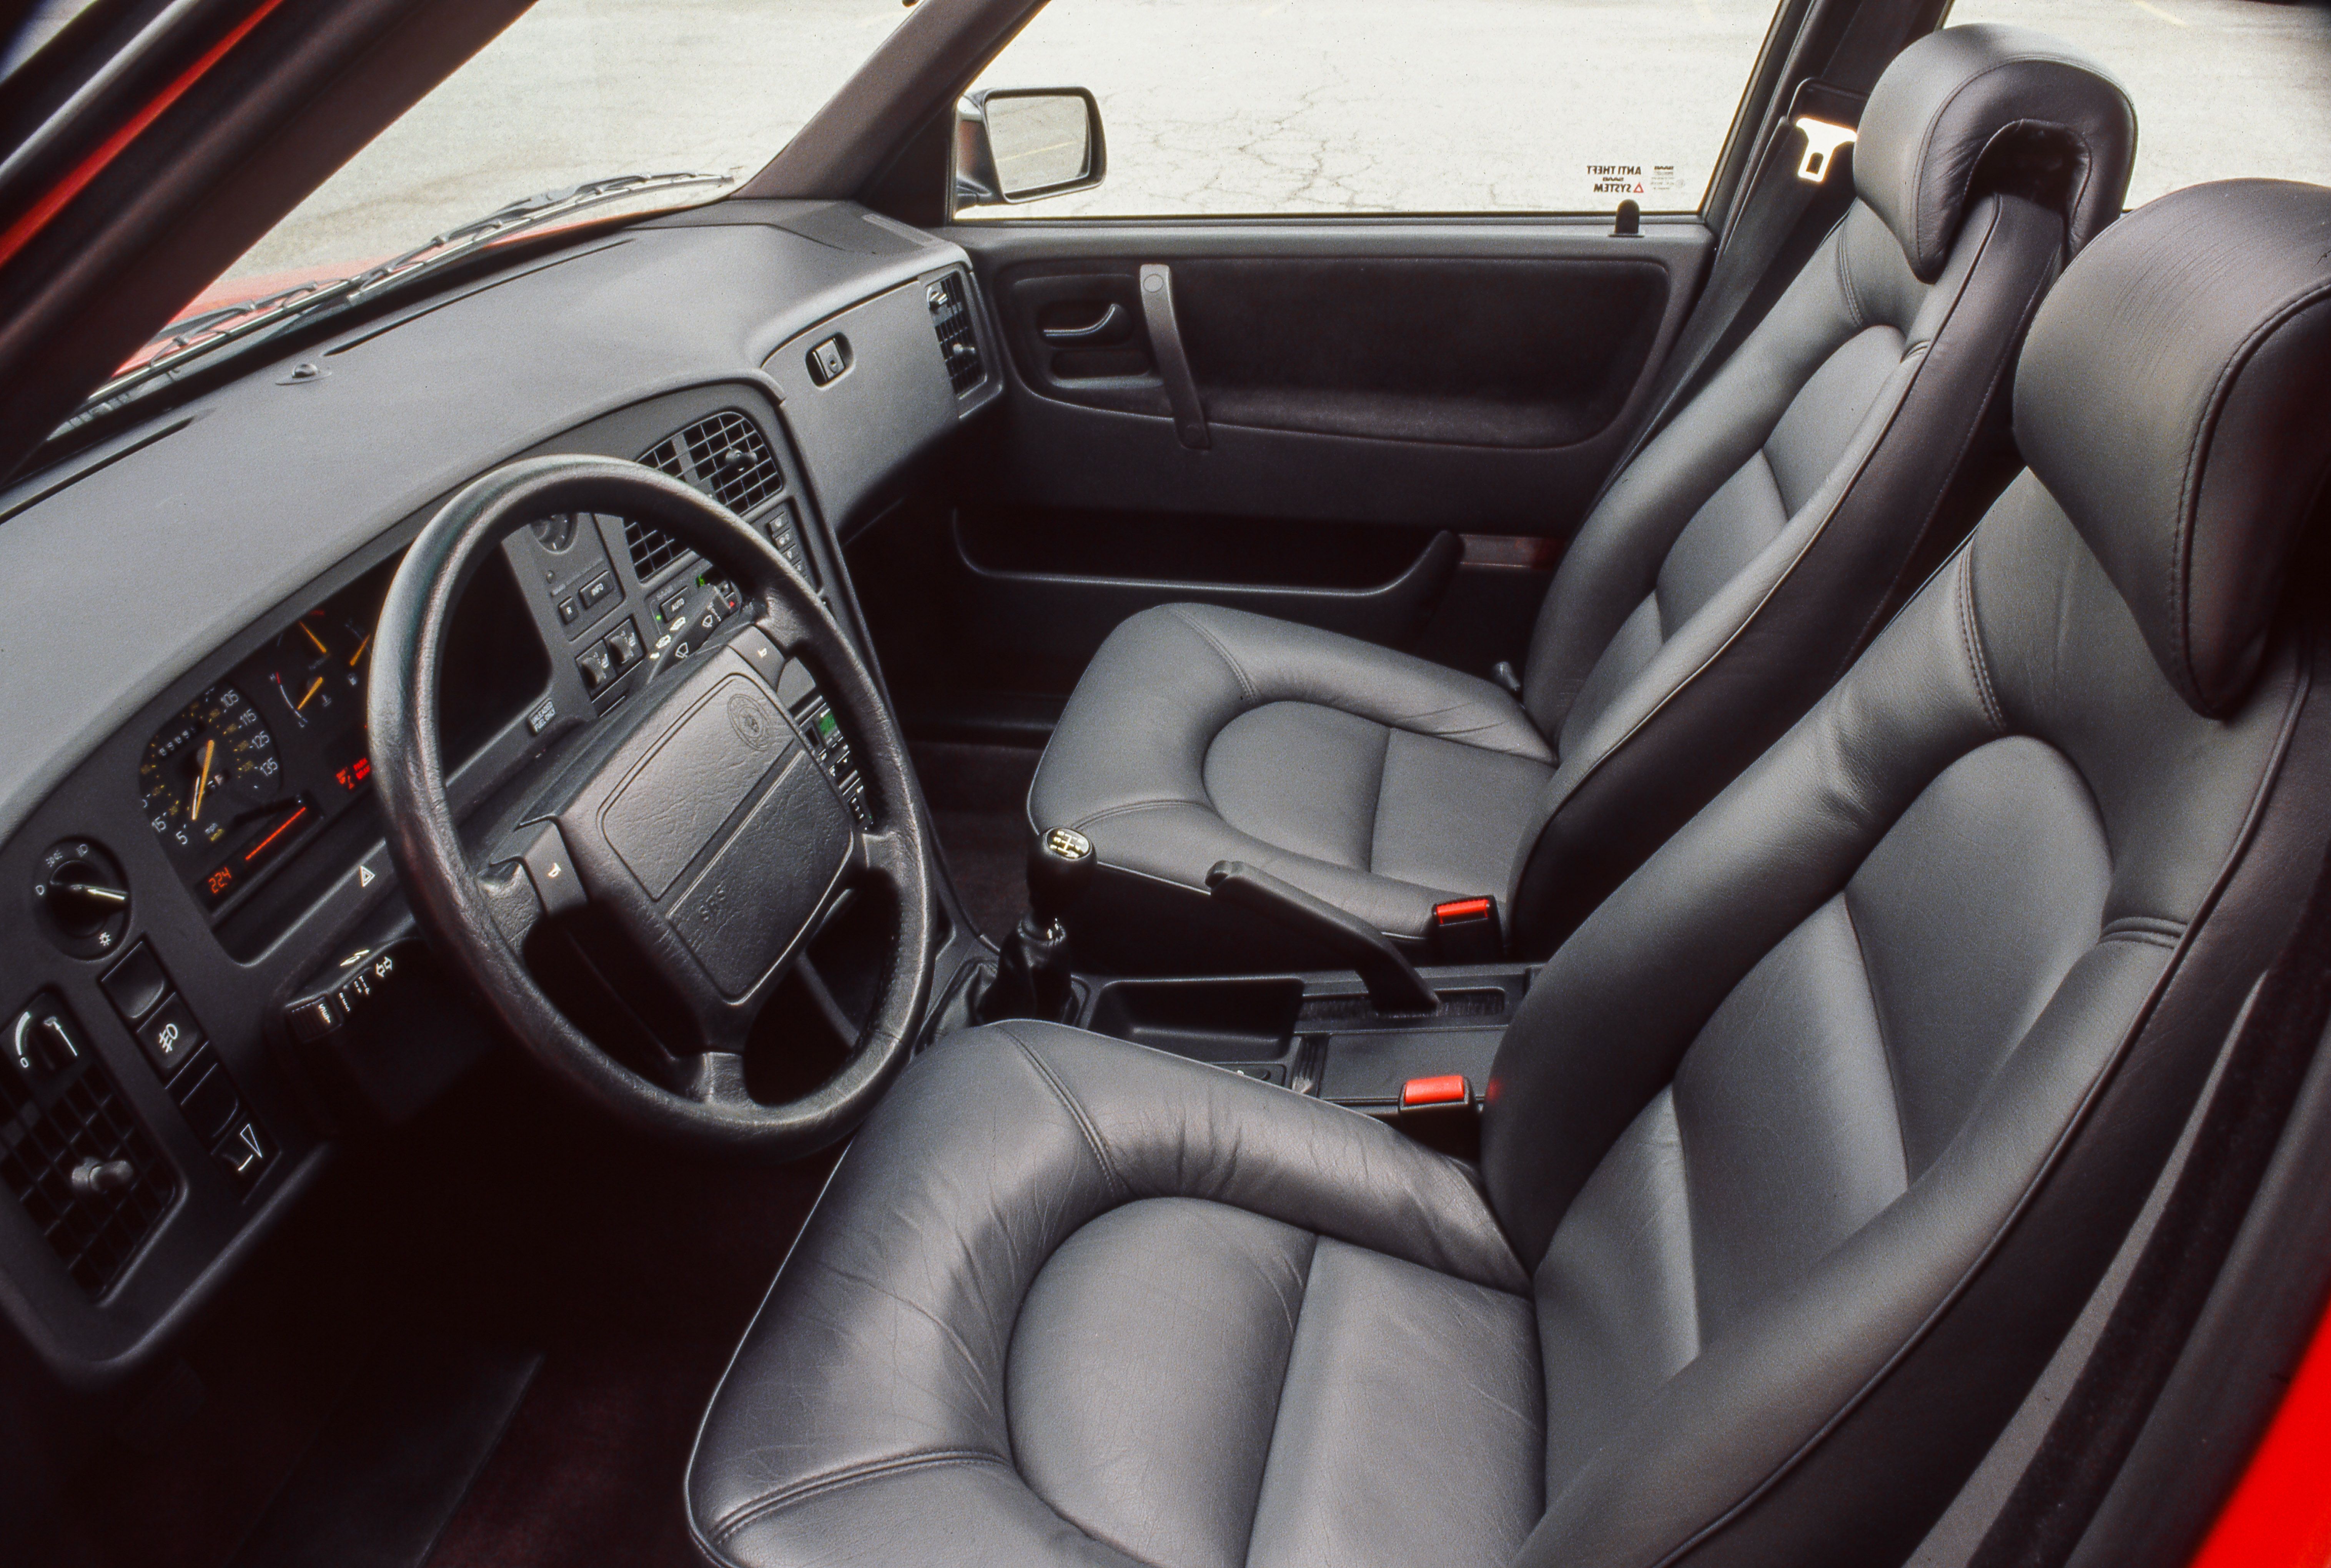 Tested: 1991 Saab 9000 Turbo Challenges the Sports Sedan Norm